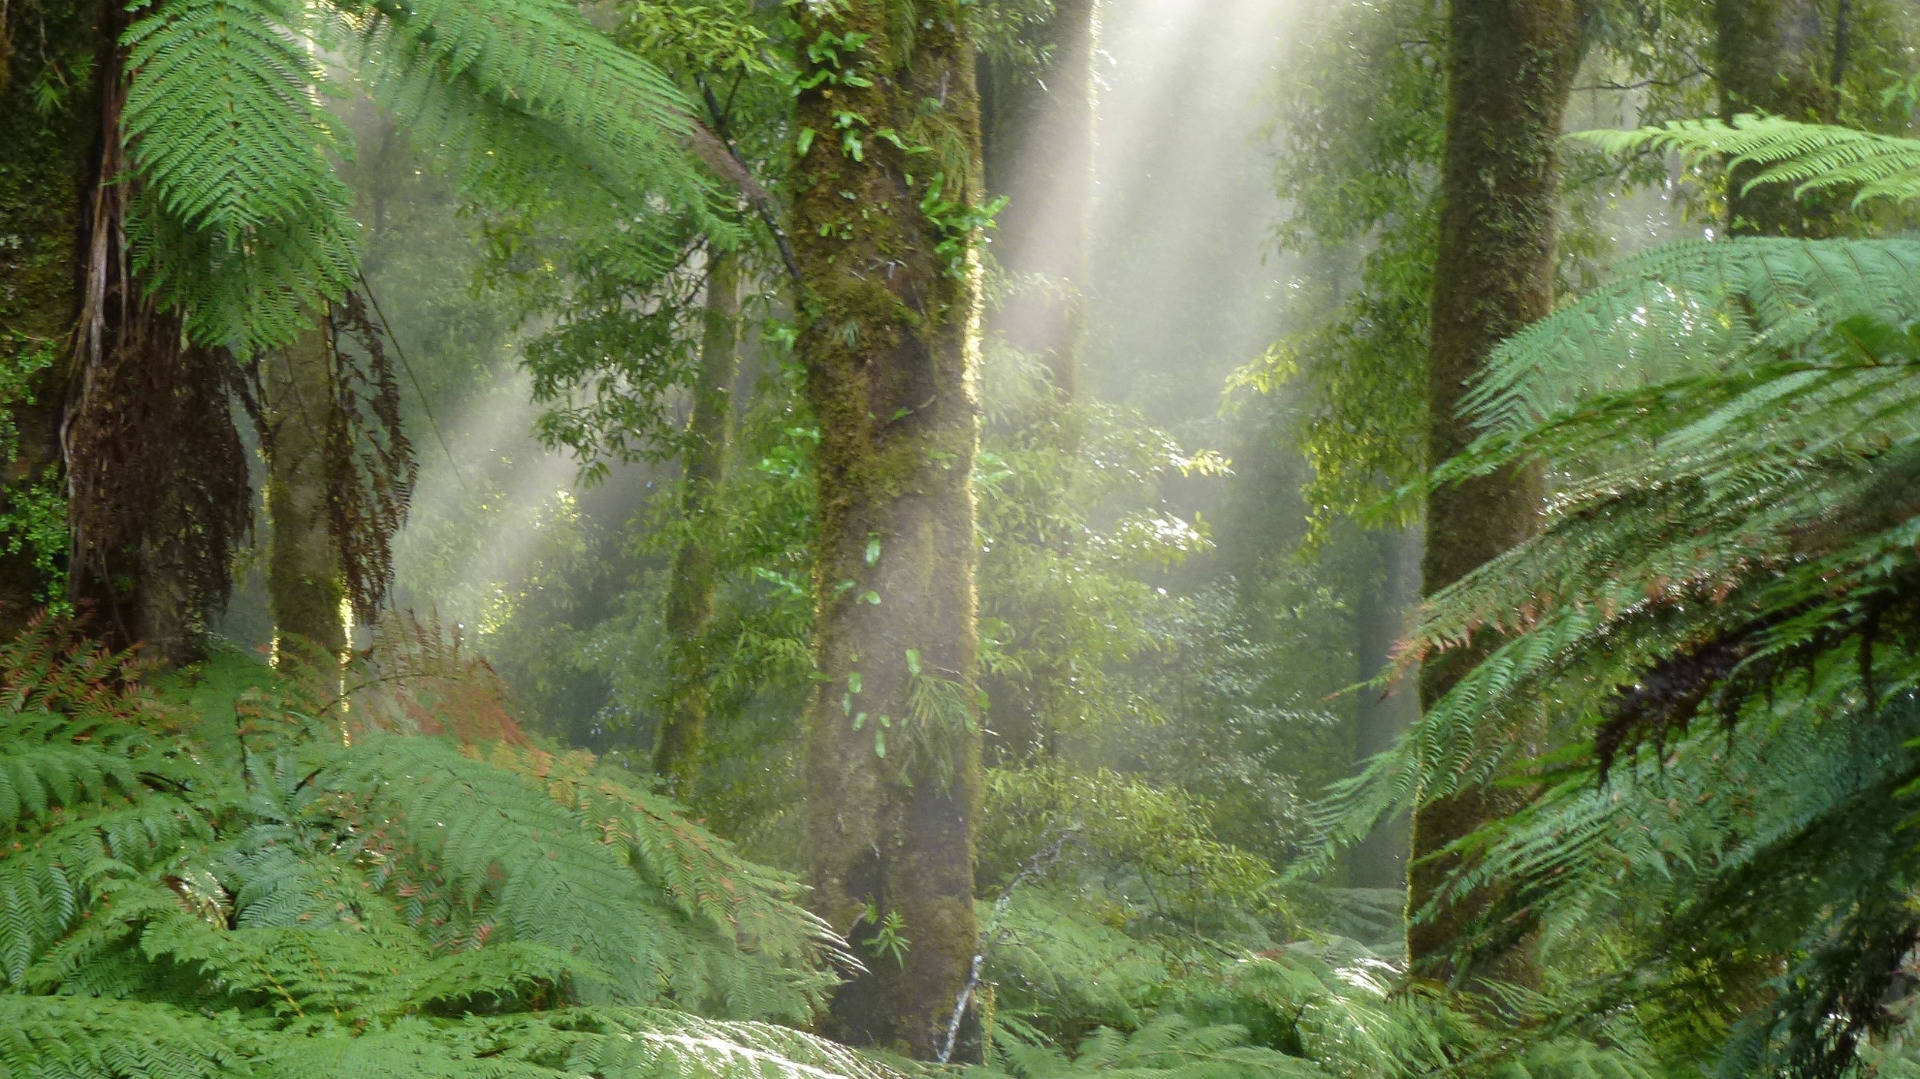 Neuseeland - Natur hautnah erleben